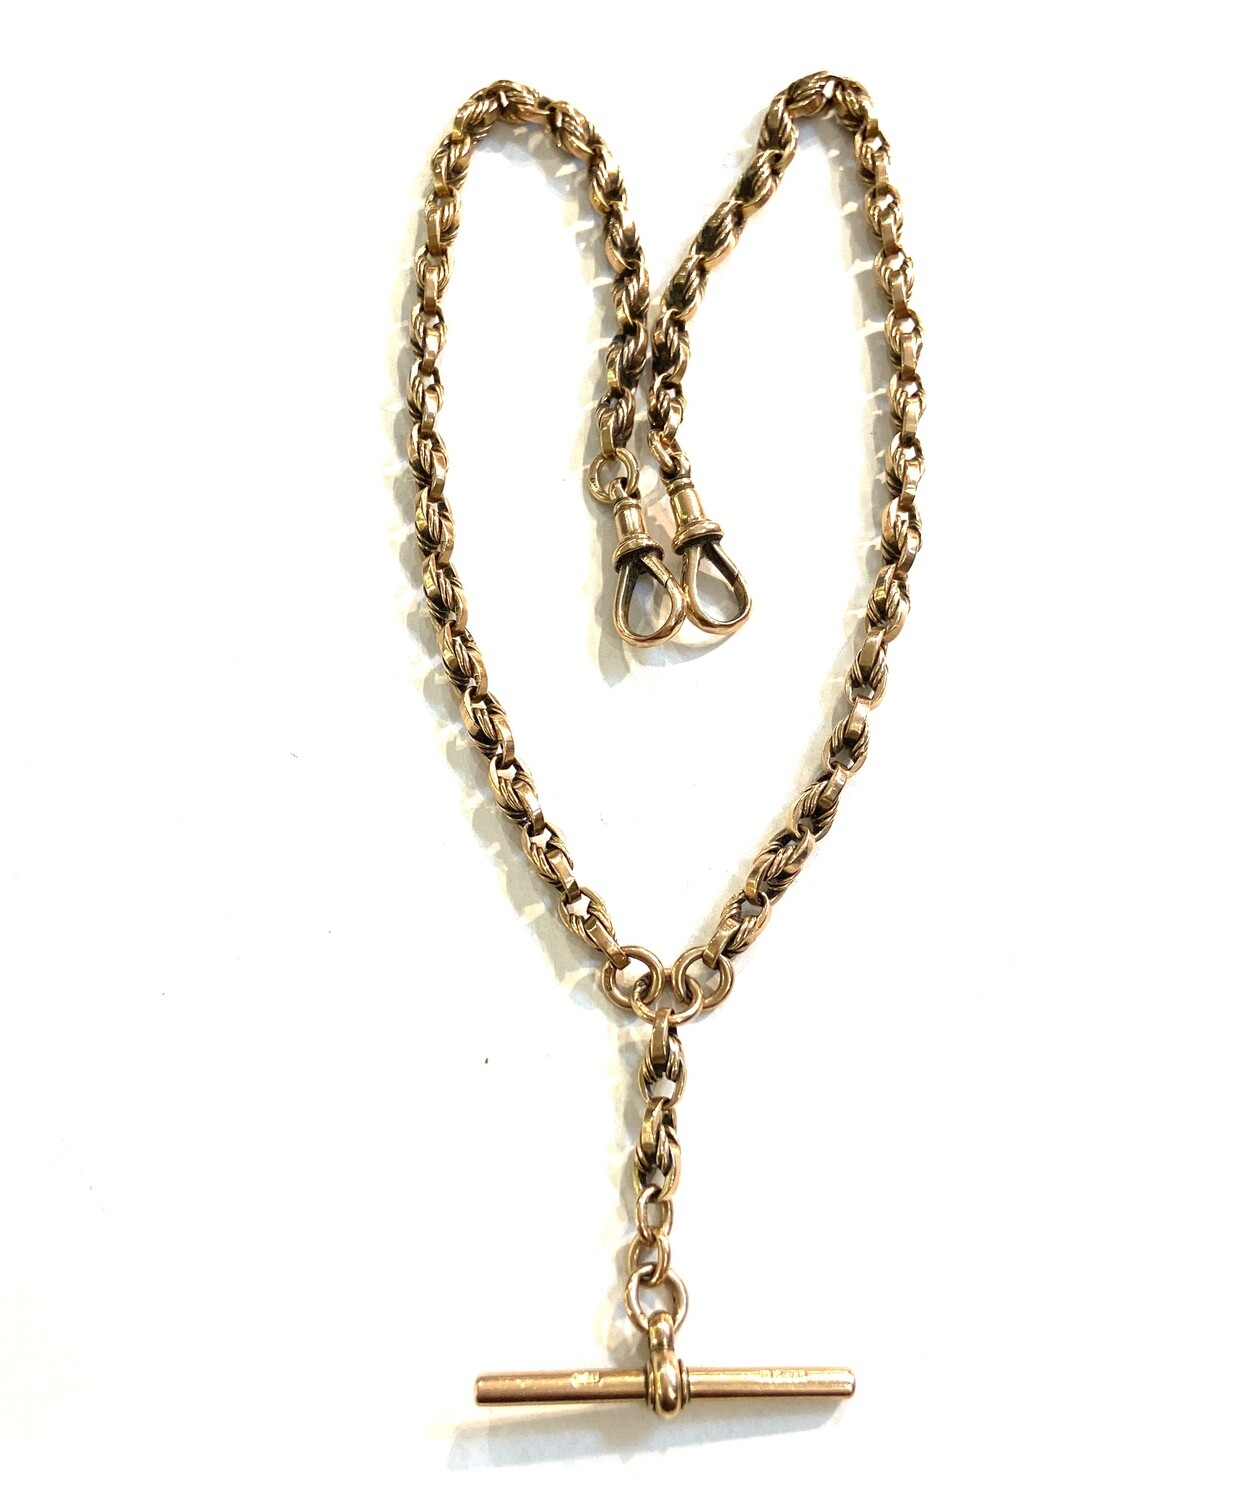 9ct 375 vintage gold Albert chain / watch chain  17 inches